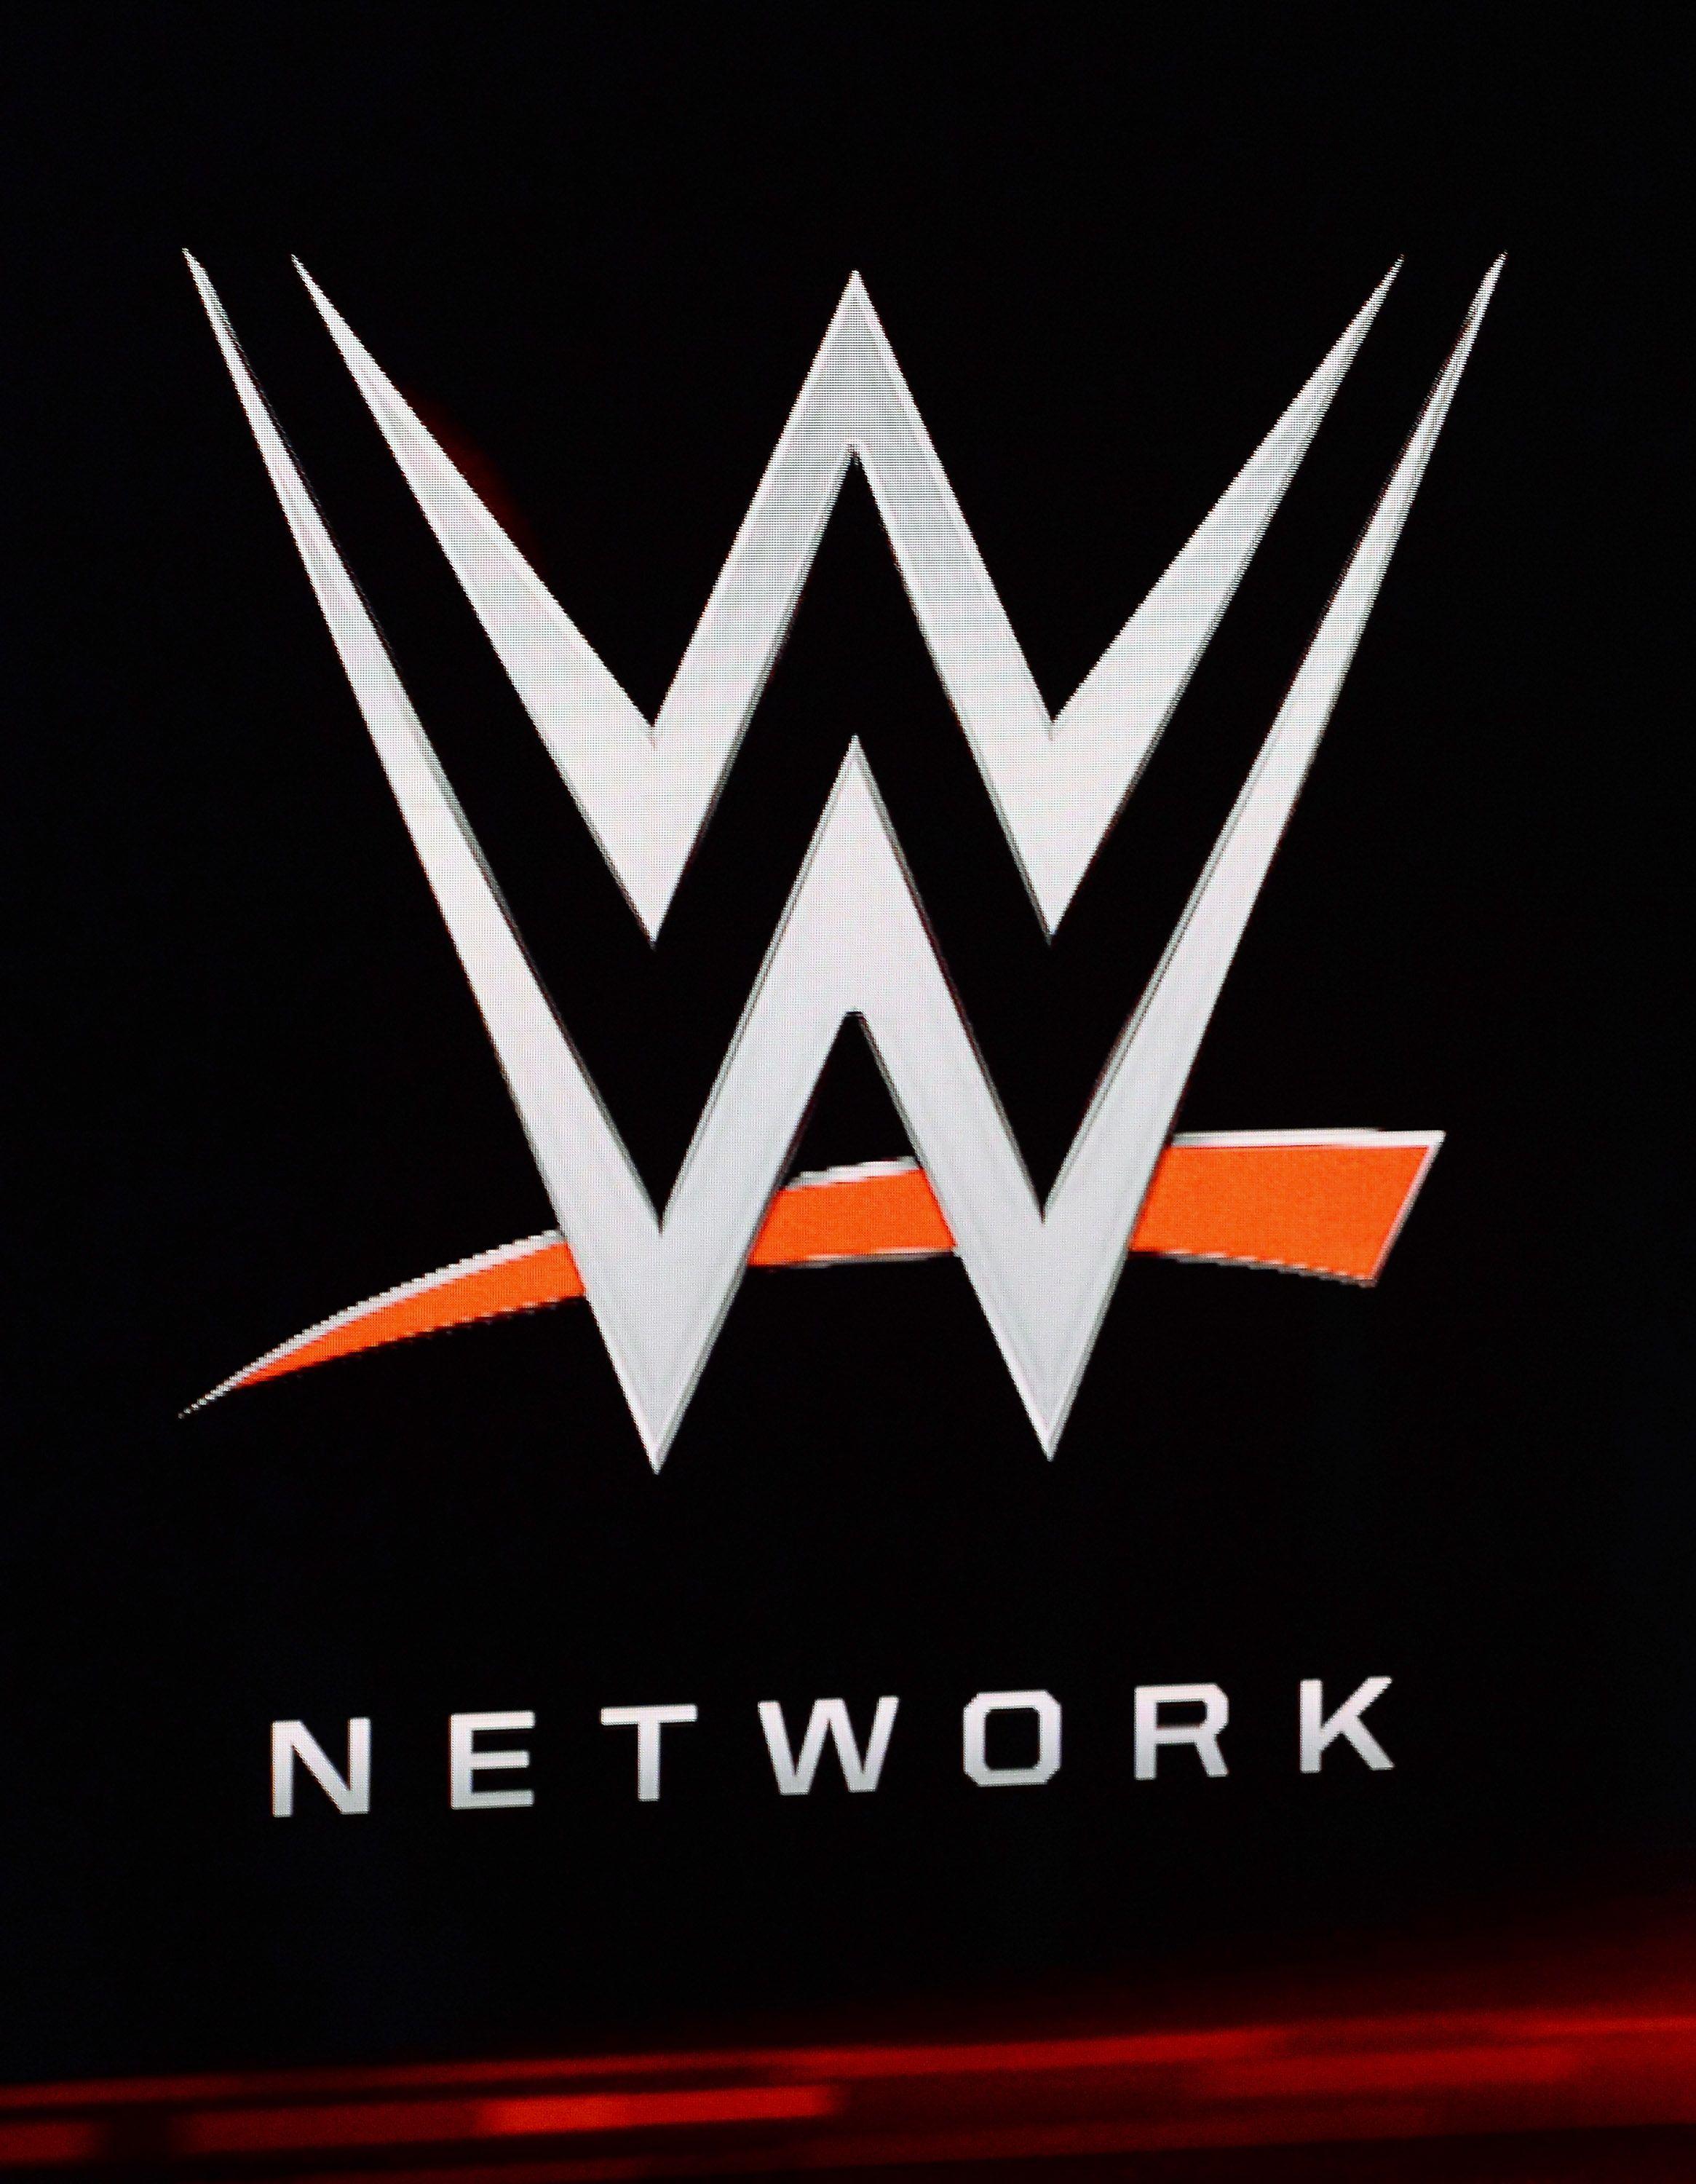 Wwe.com Logo - Investors Body-Slam WWE Wrestling Network | Time